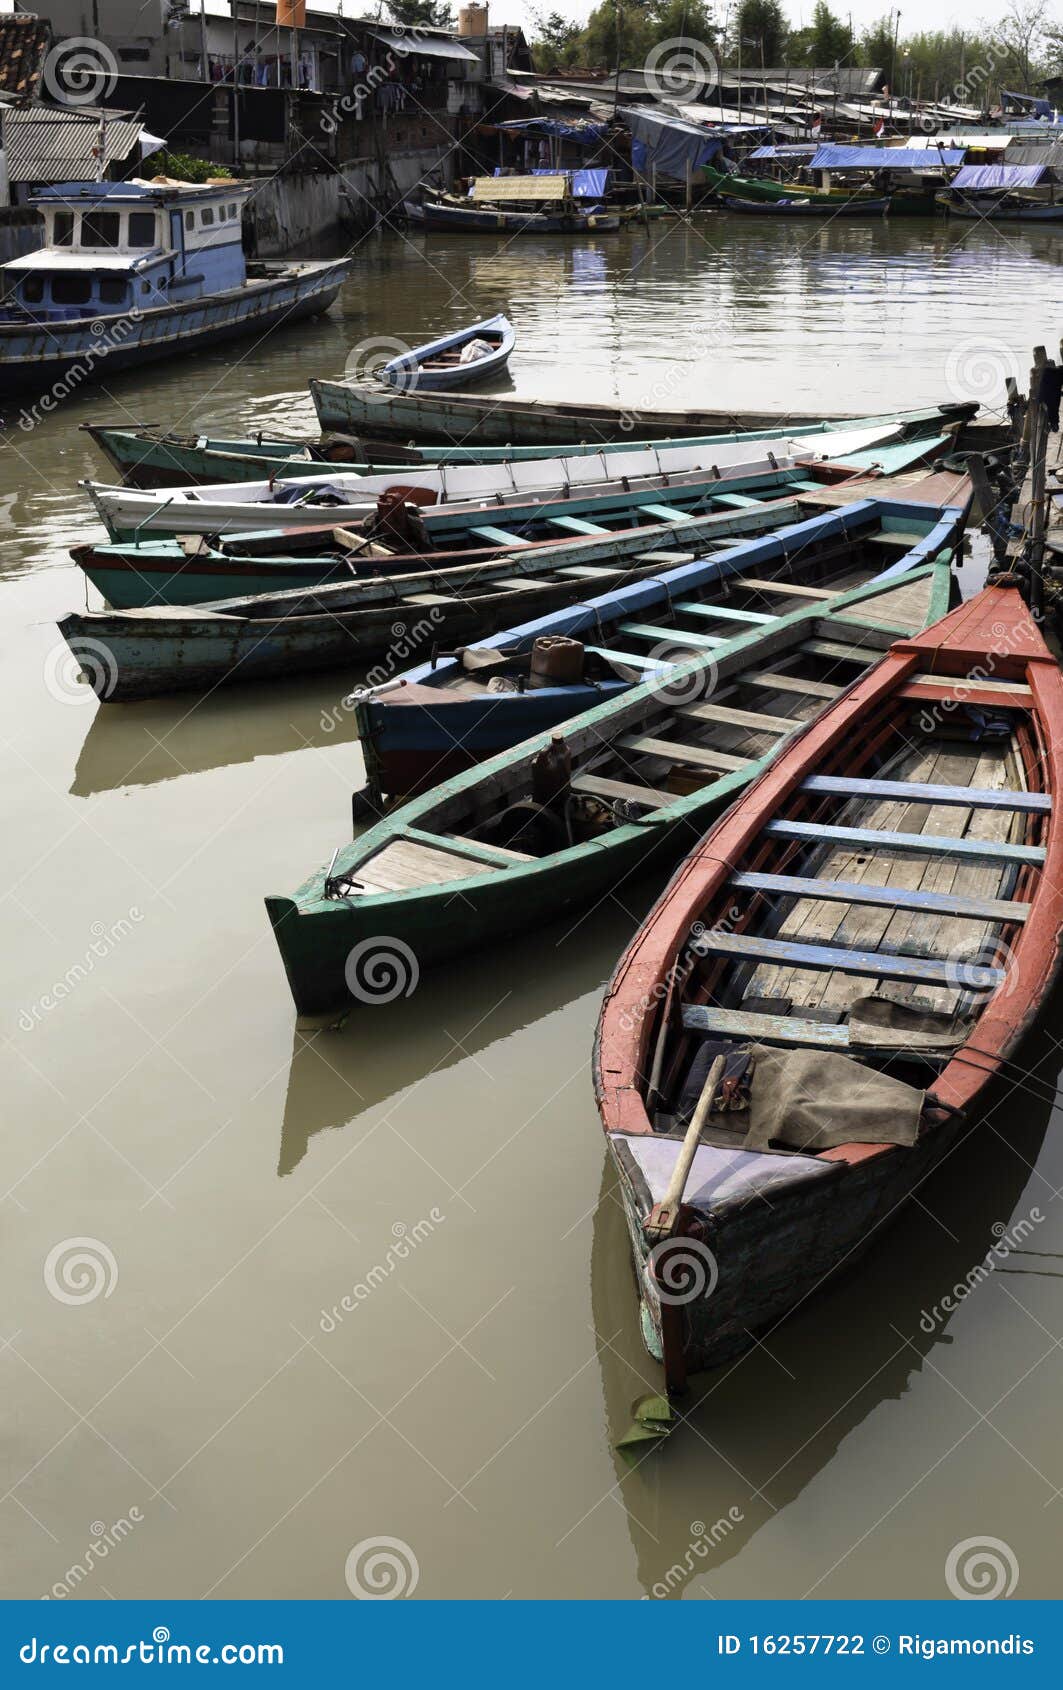 boats in jakarta slum